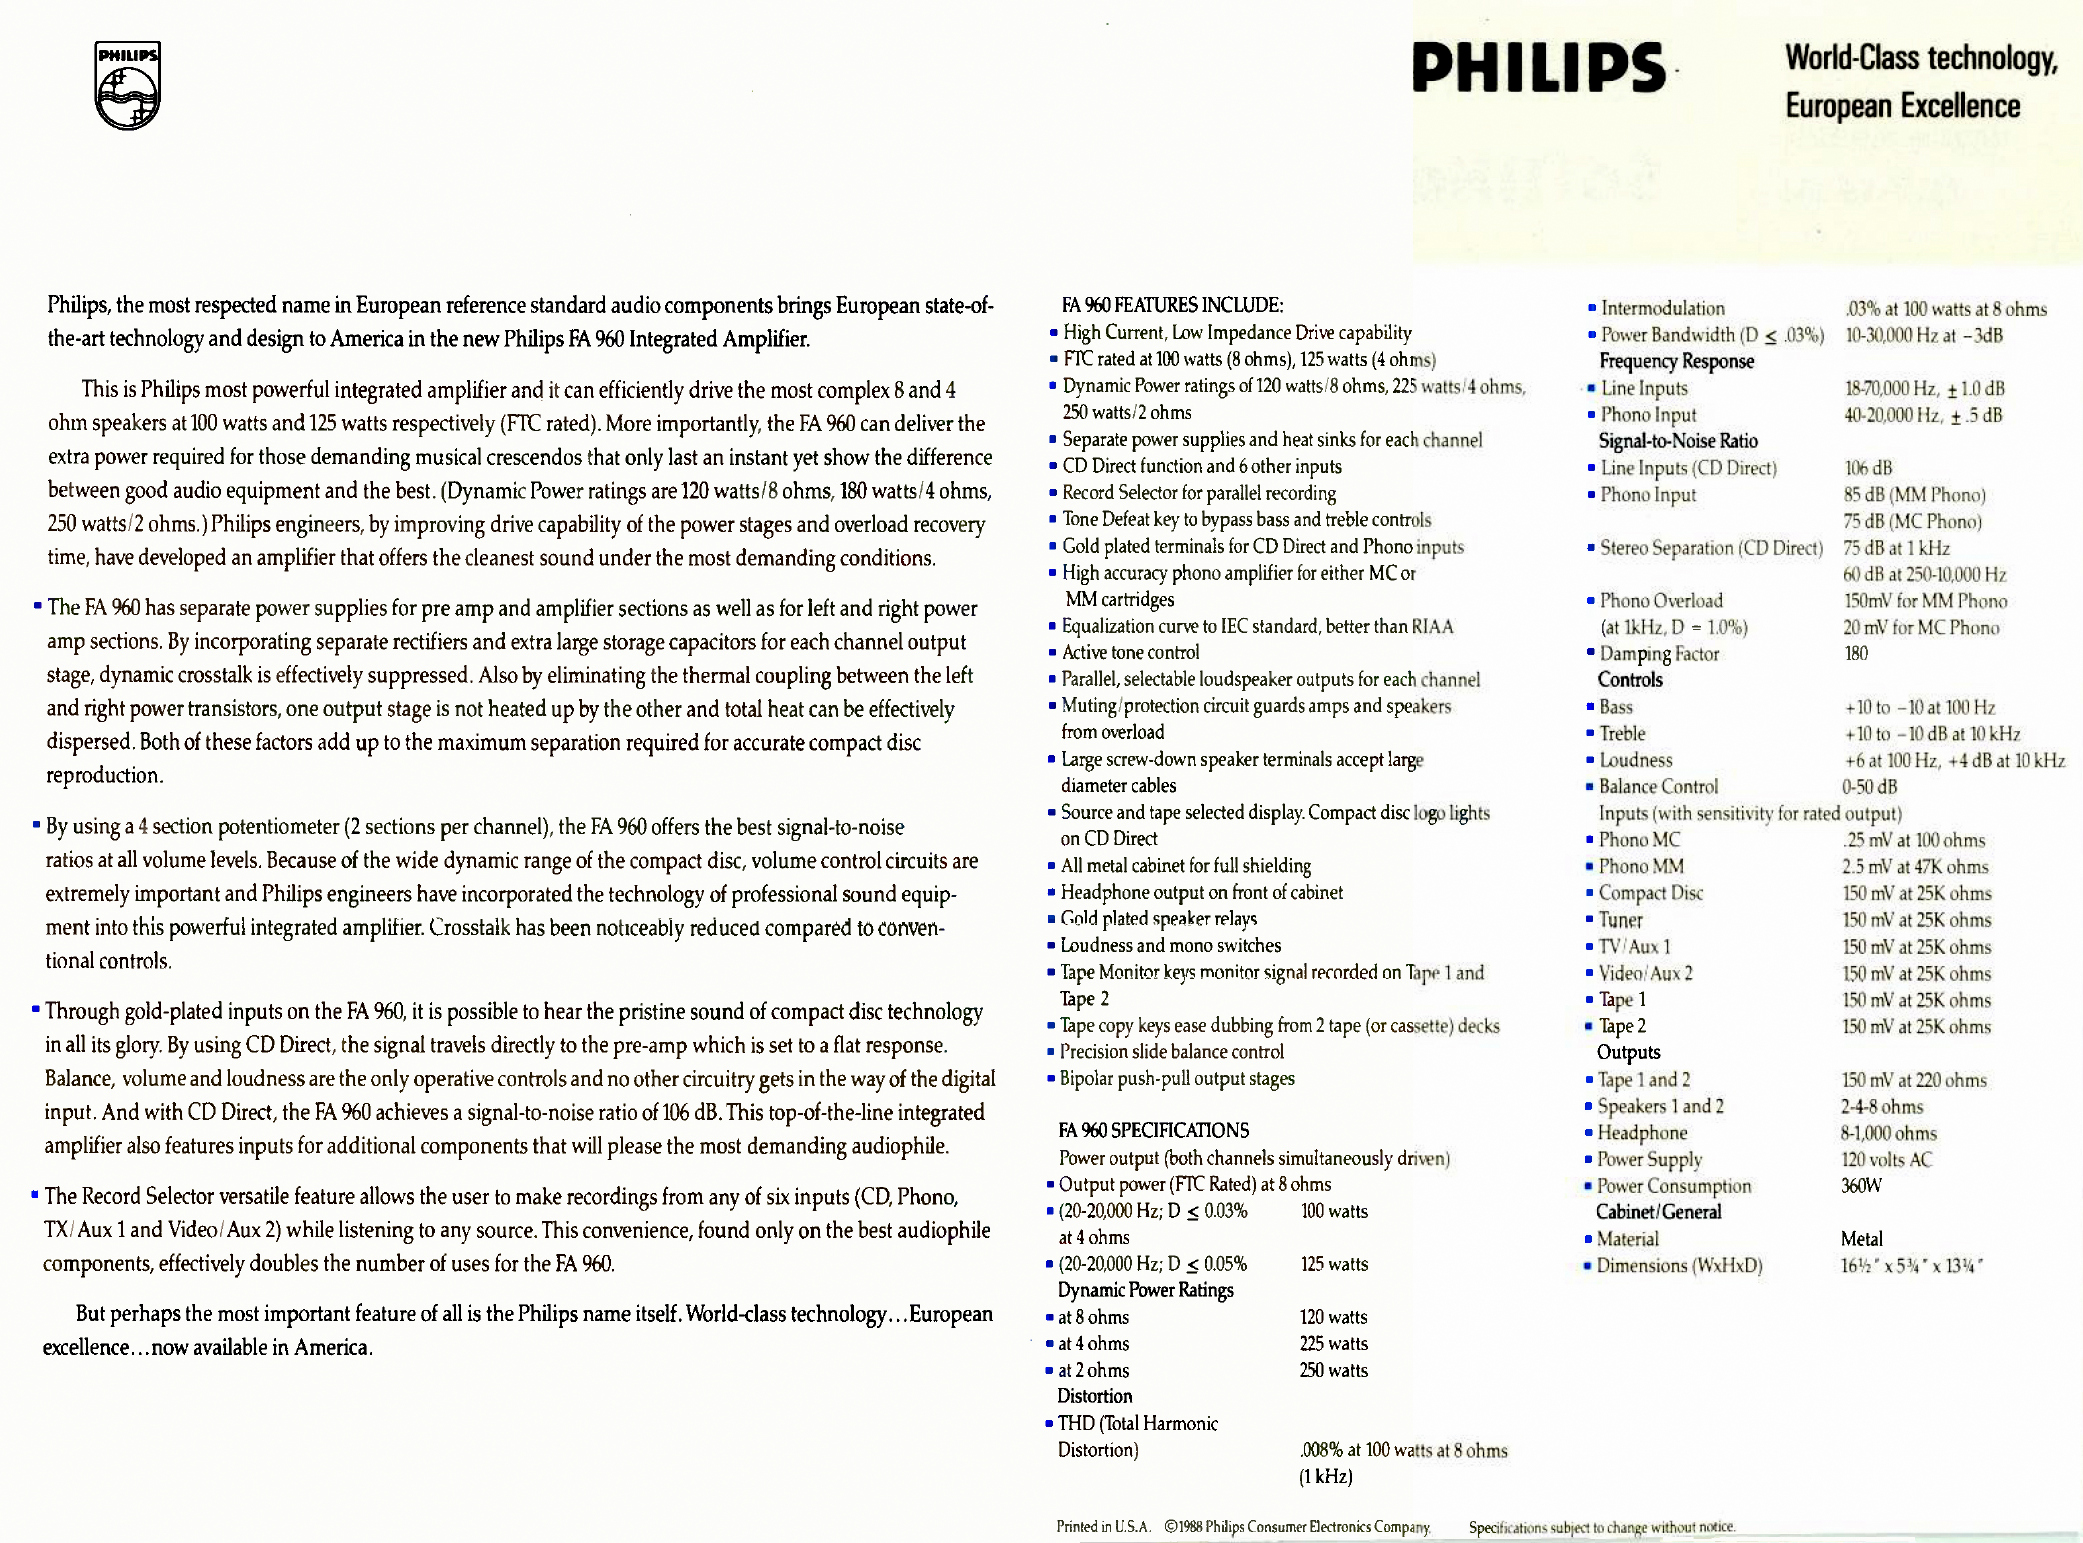 1988 Philips Audio-9.jpg